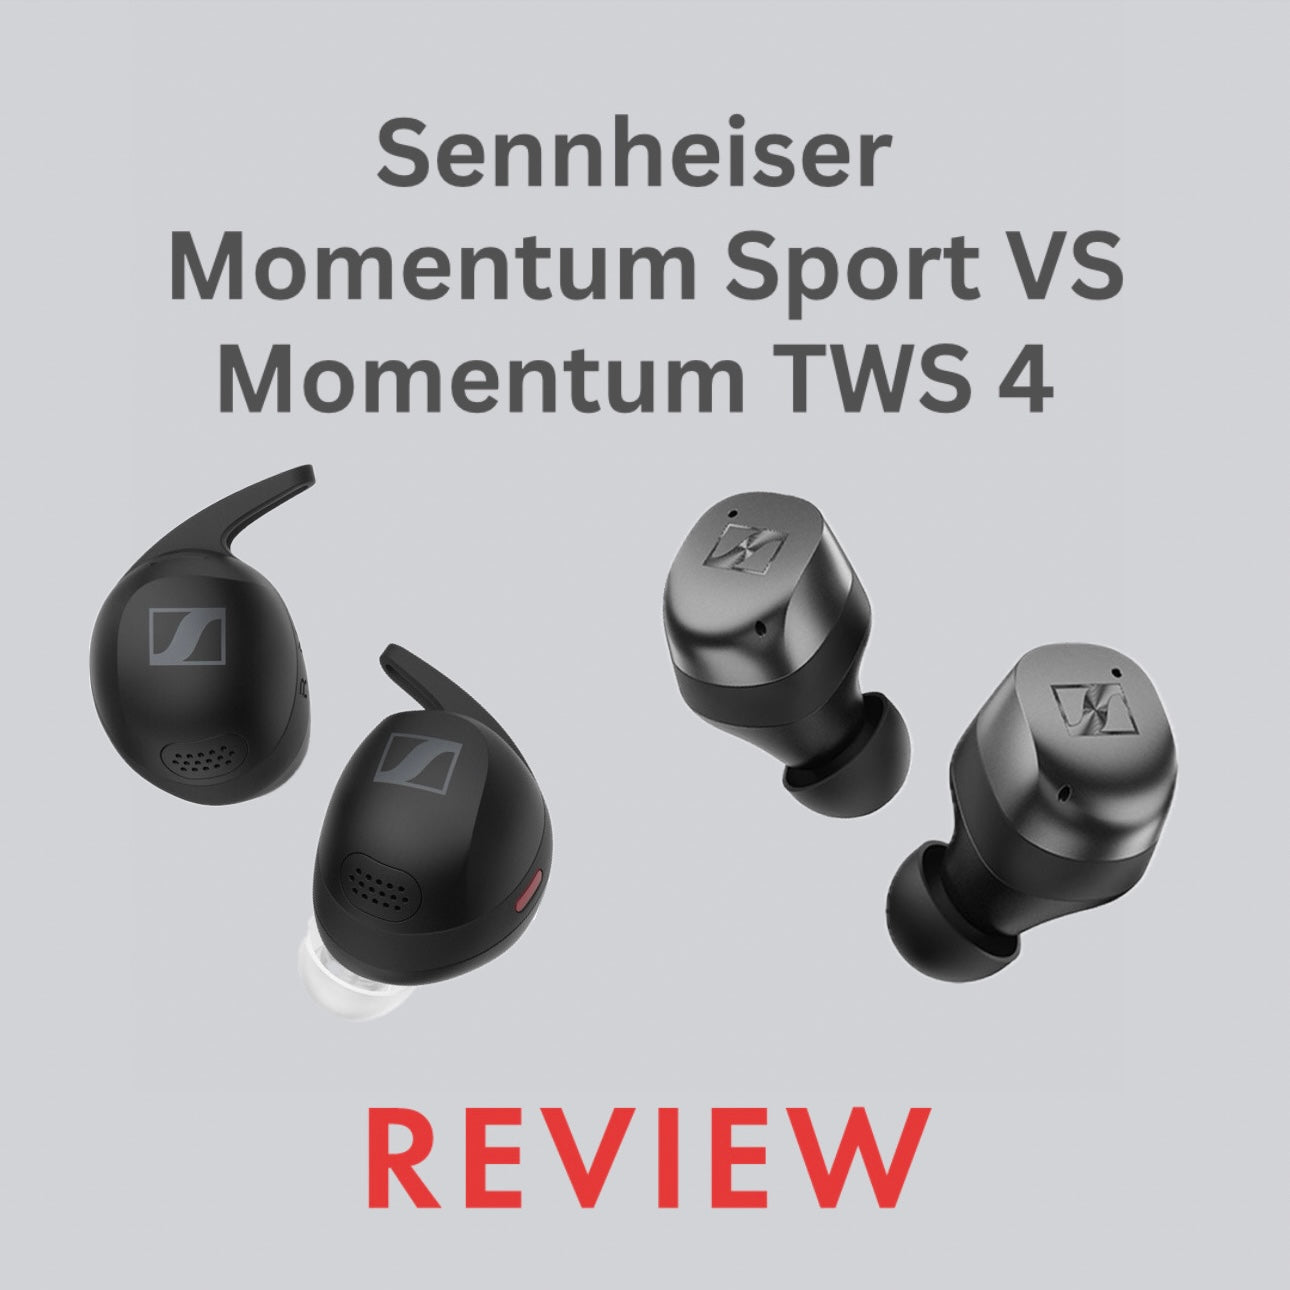 Sennheiser Momentum Sport vs Momentum TWS 4 - Comparison Review